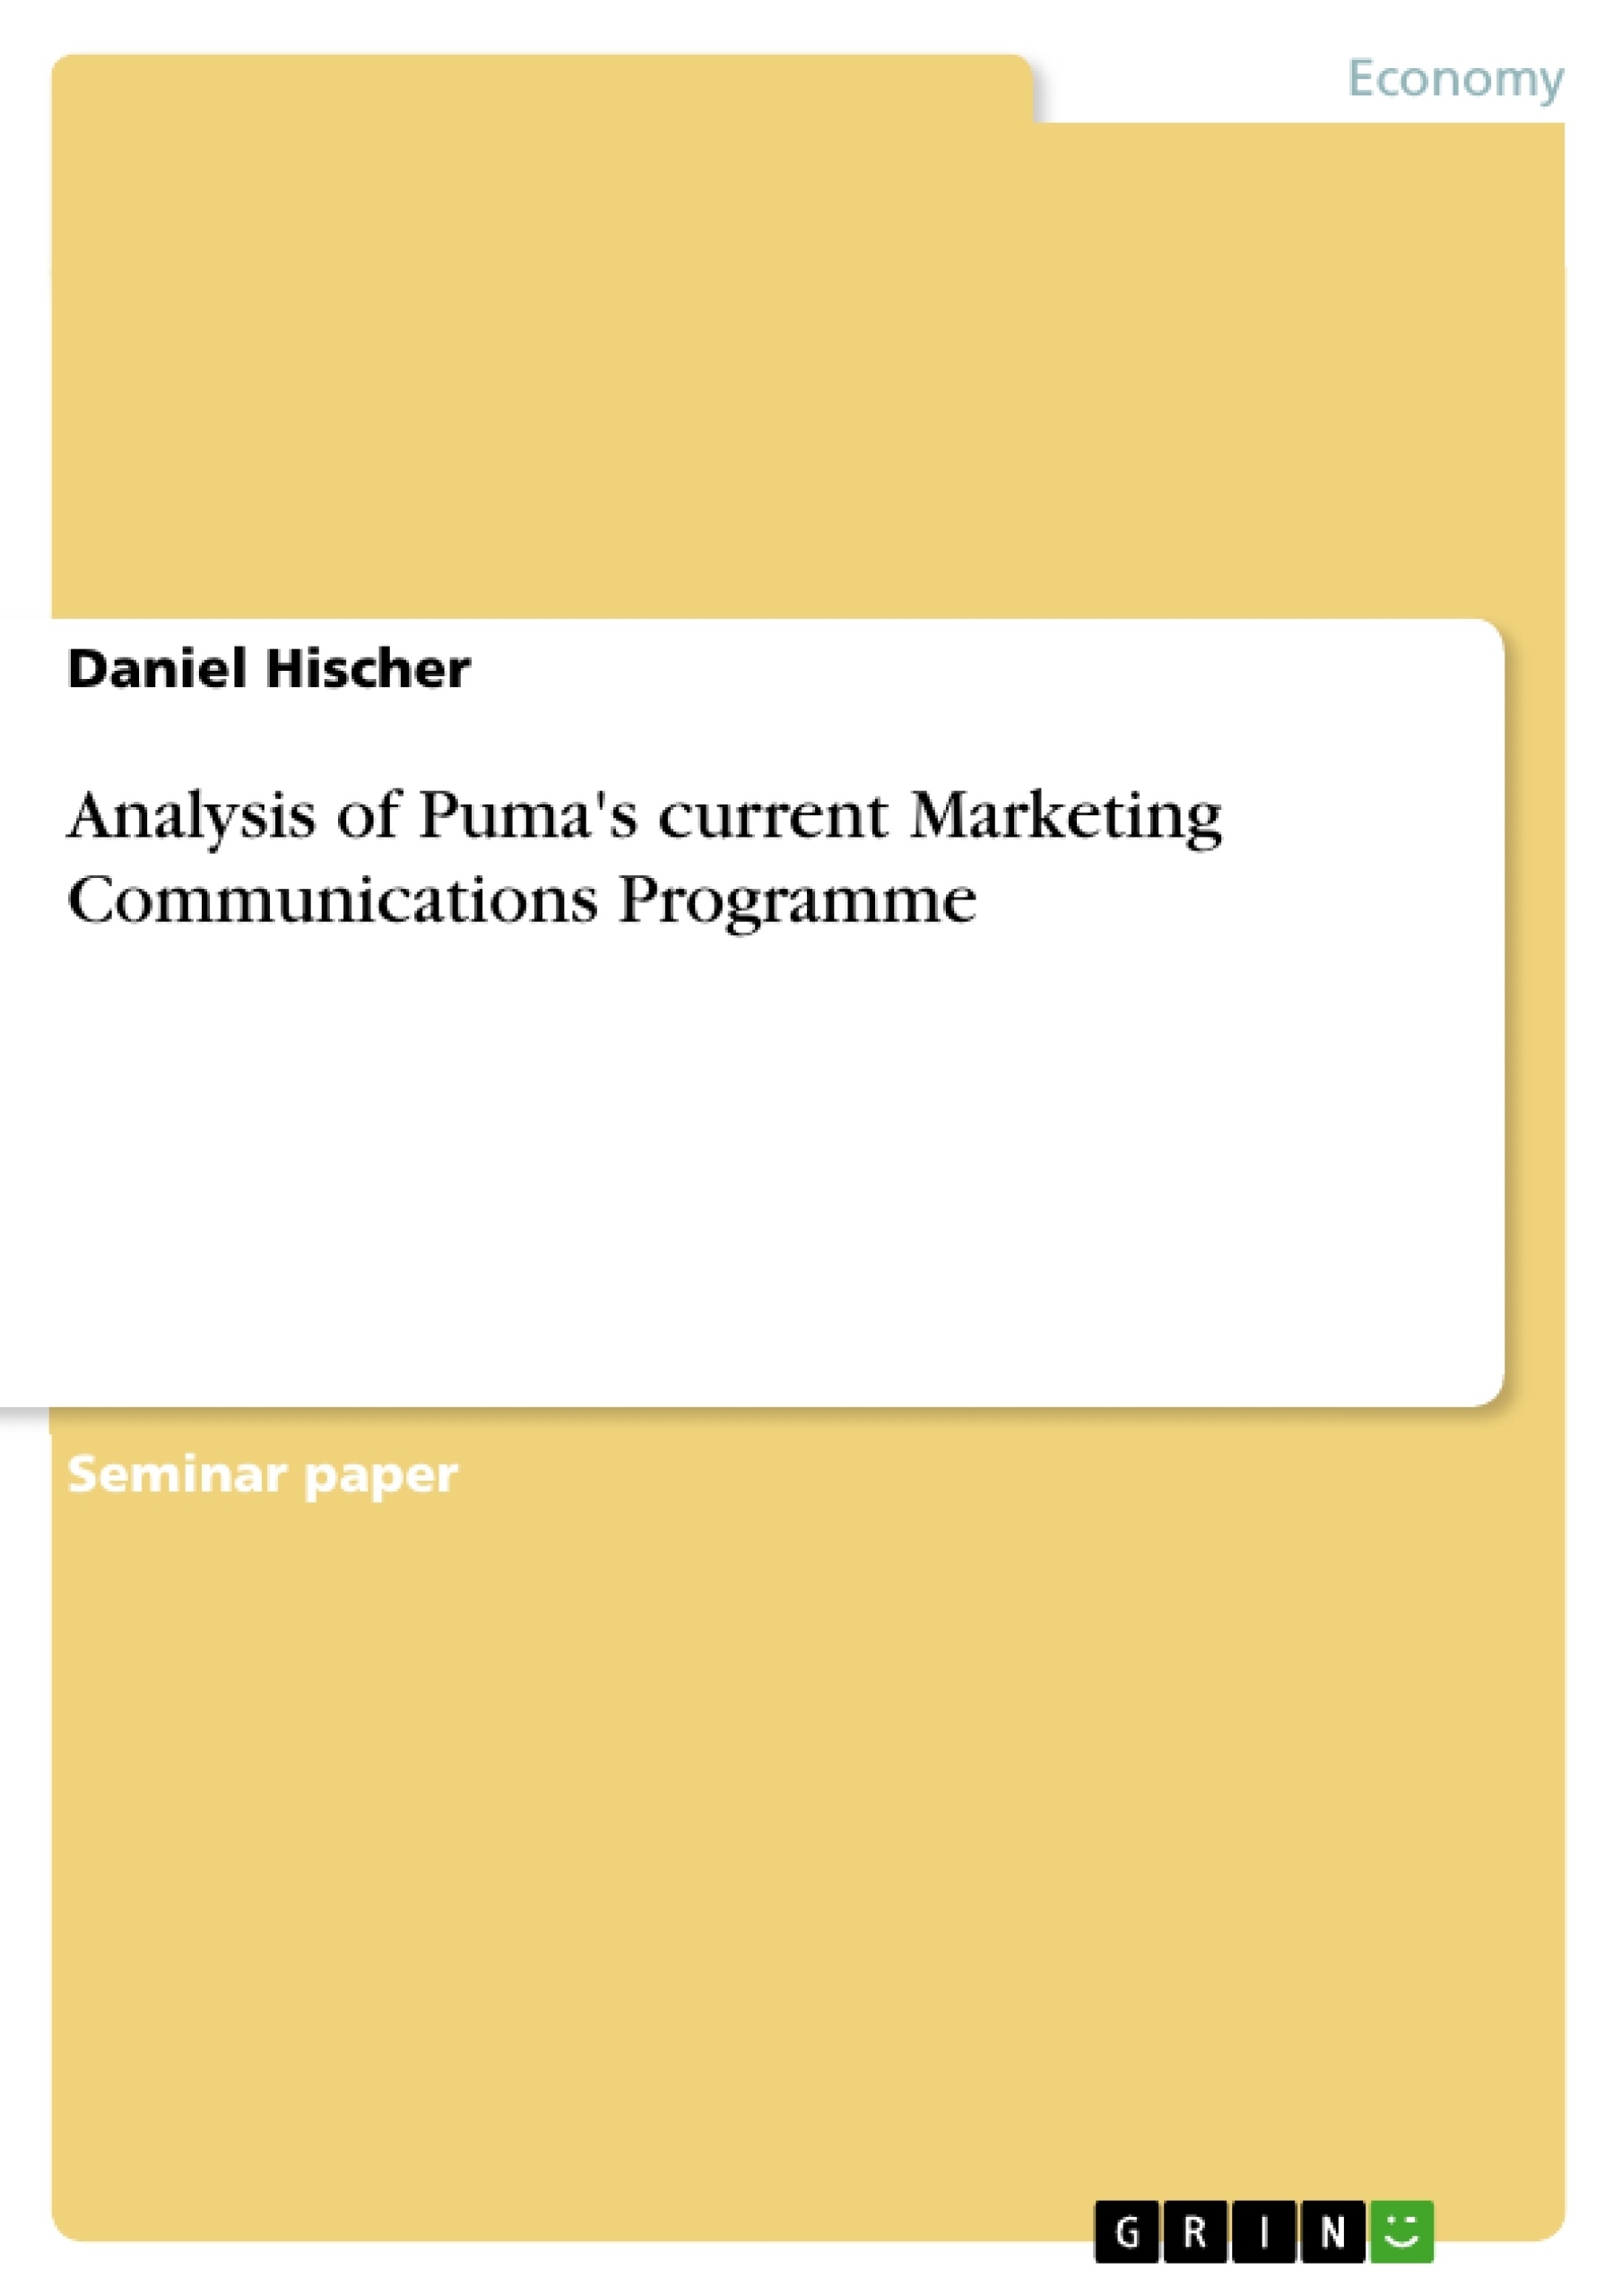 Analysis of Puma's Marketing Communications Programme - GRIN